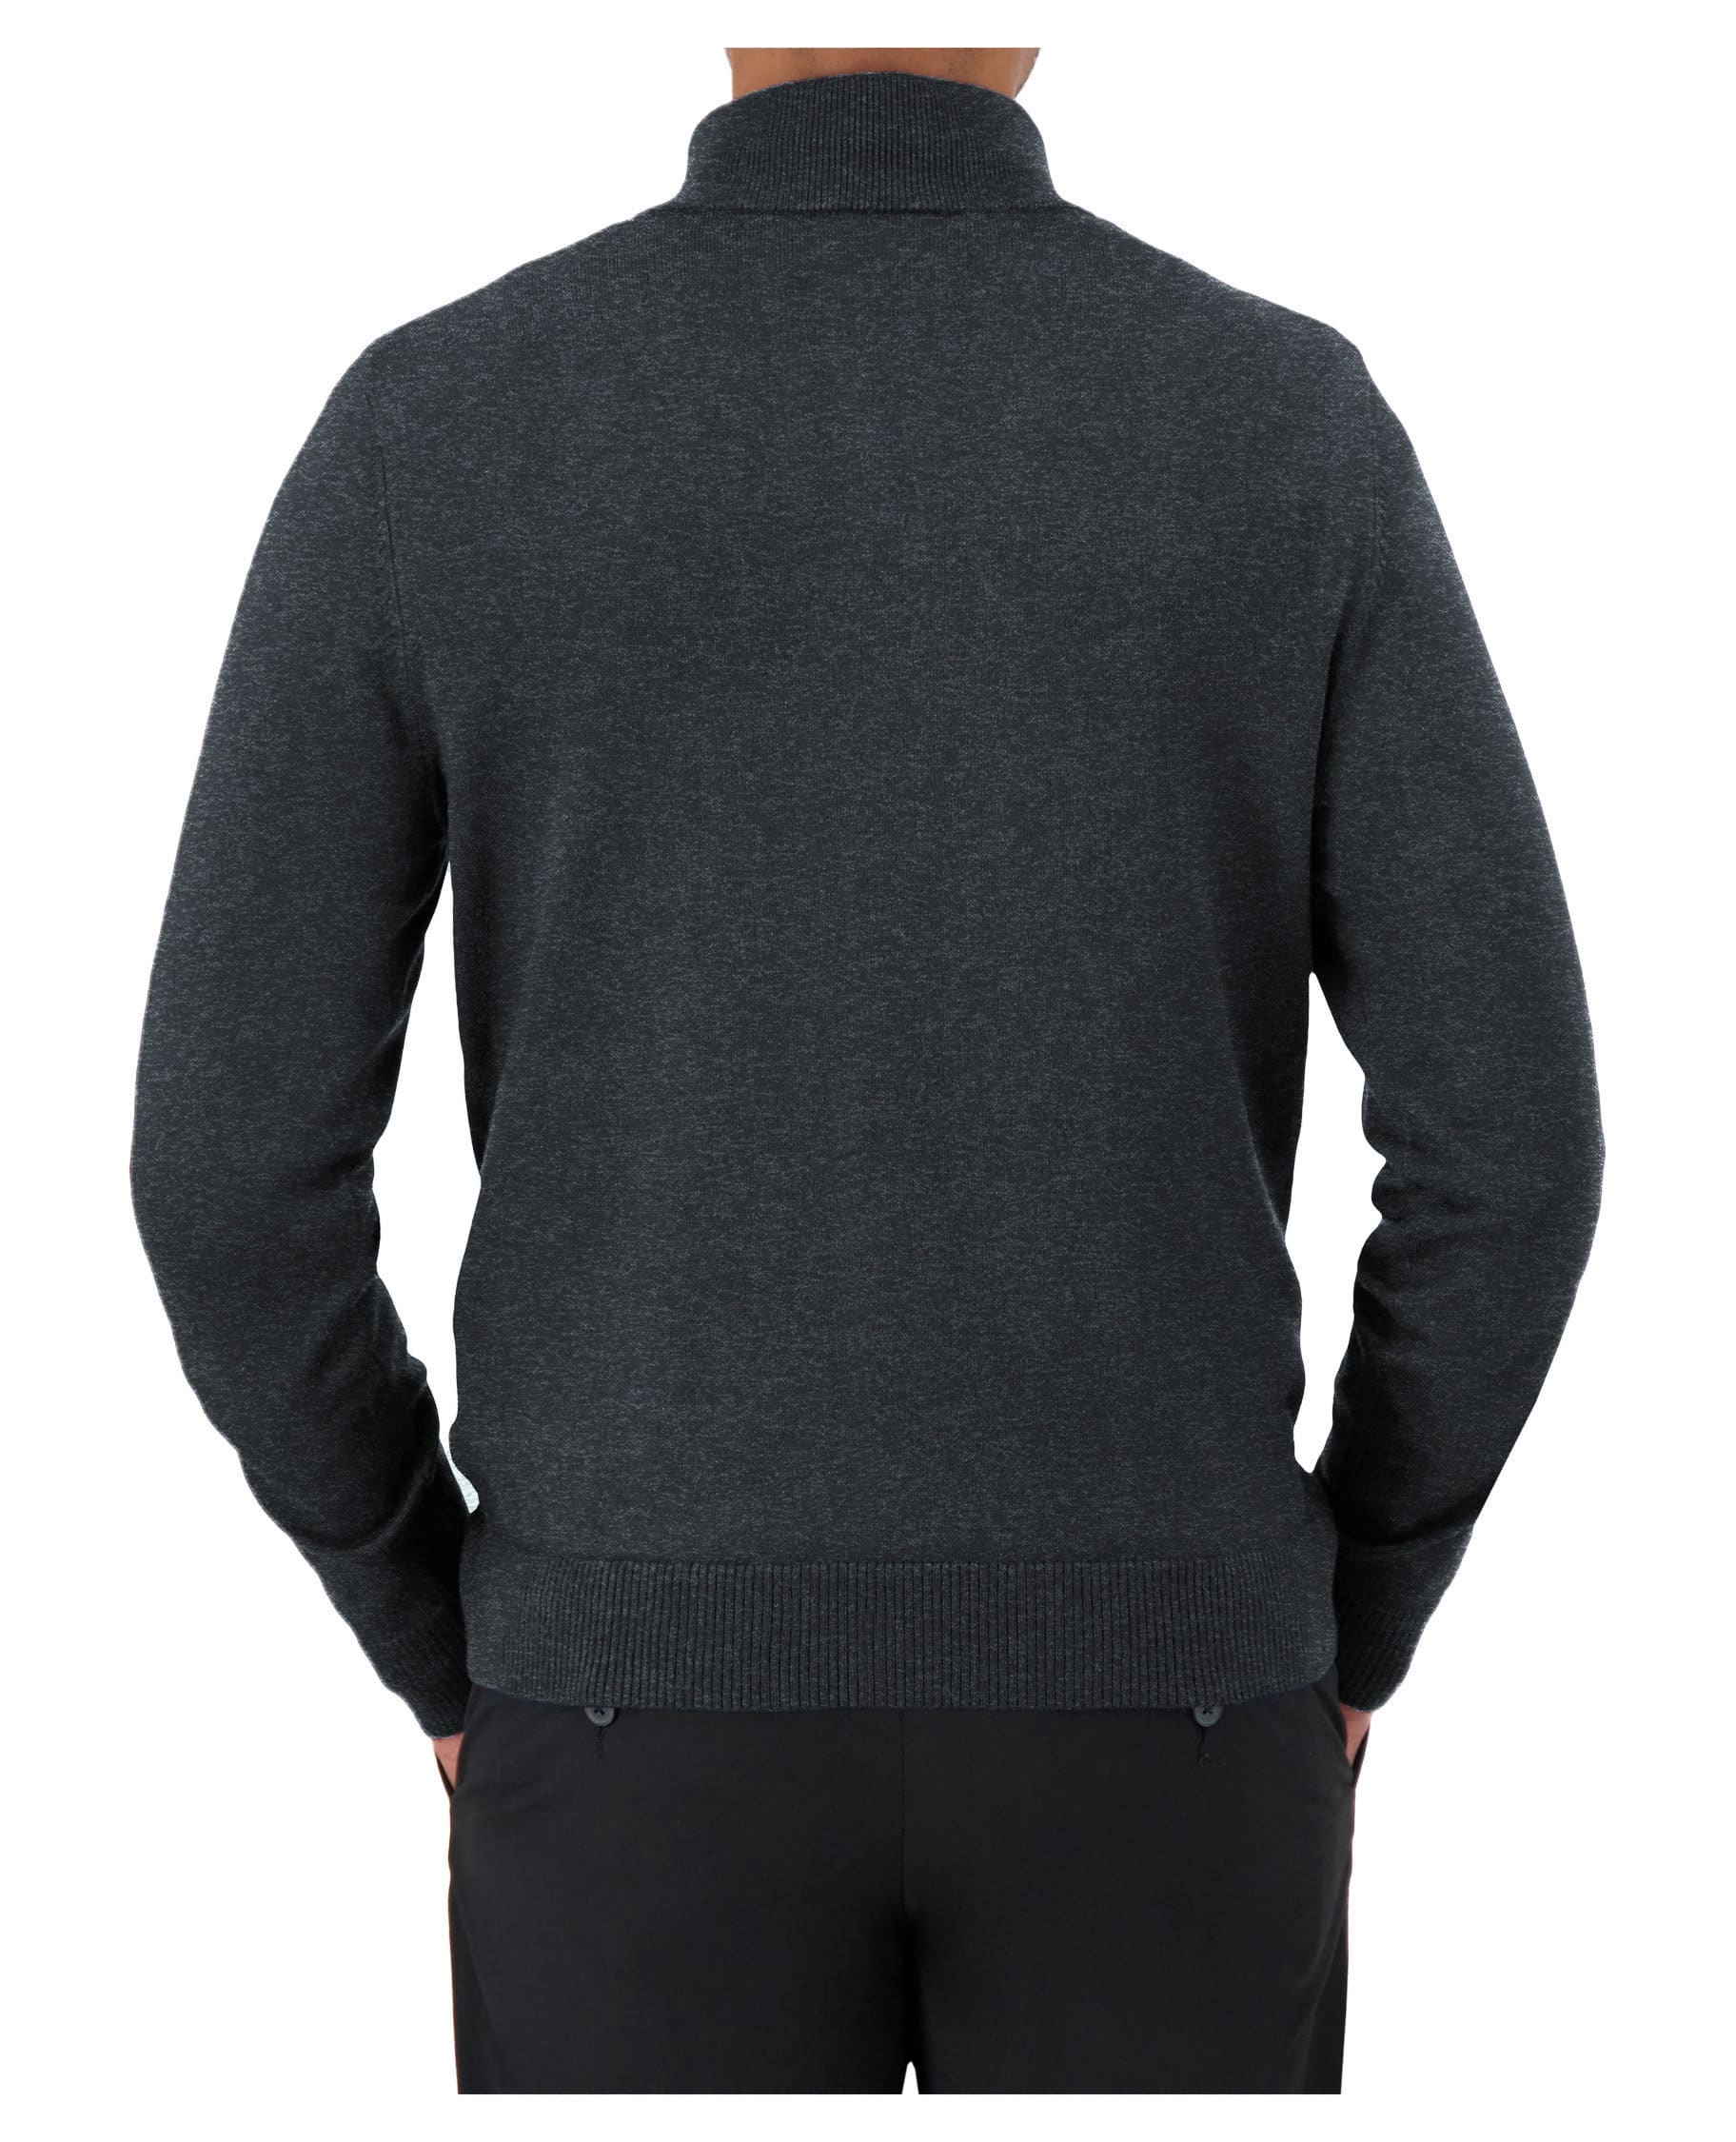 back of dark greay mock neck quarter zip long sleeve sweater 